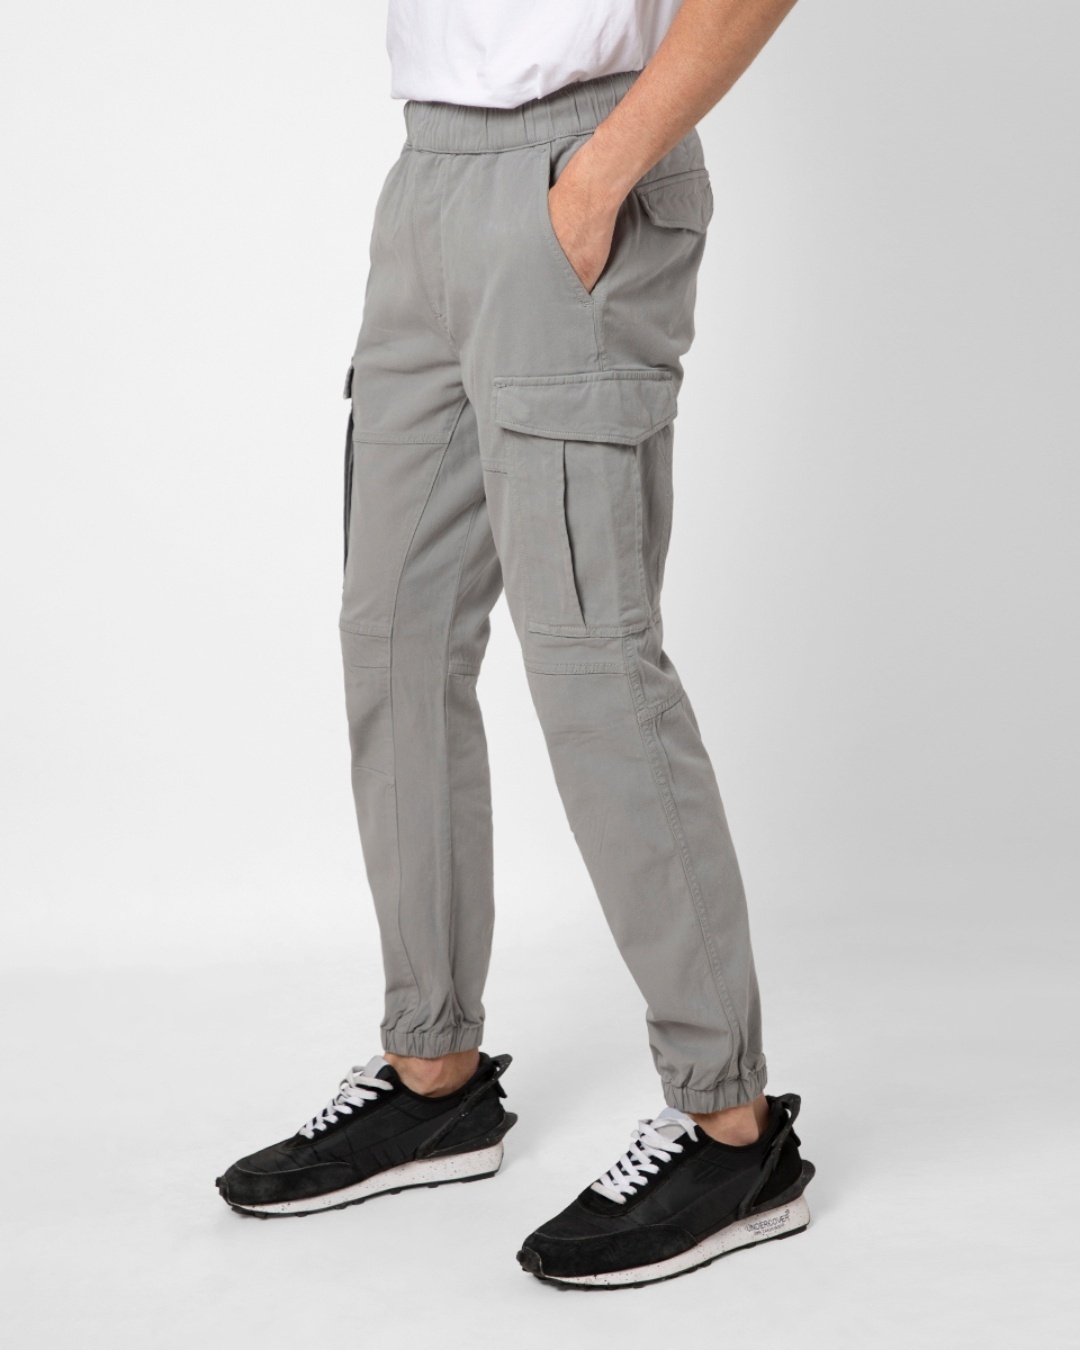 Buy Men's Grey Slim Fit Cargo Pants for Men Grey Online at Bewakoof